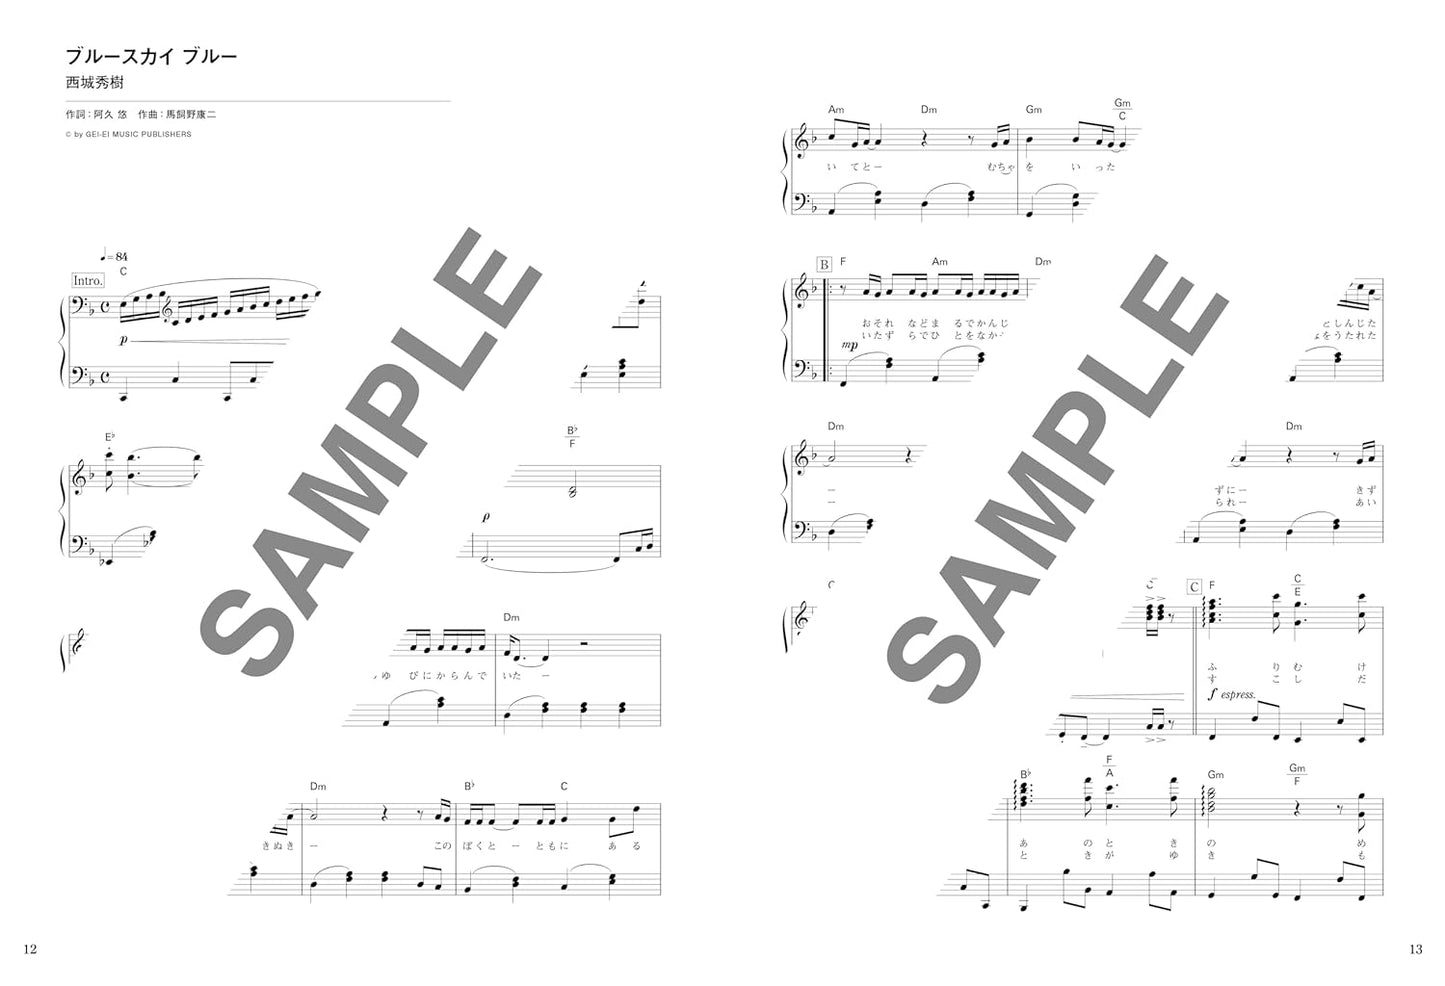 J-POP Kayokyoku for Piano Solo Sheet Music Book